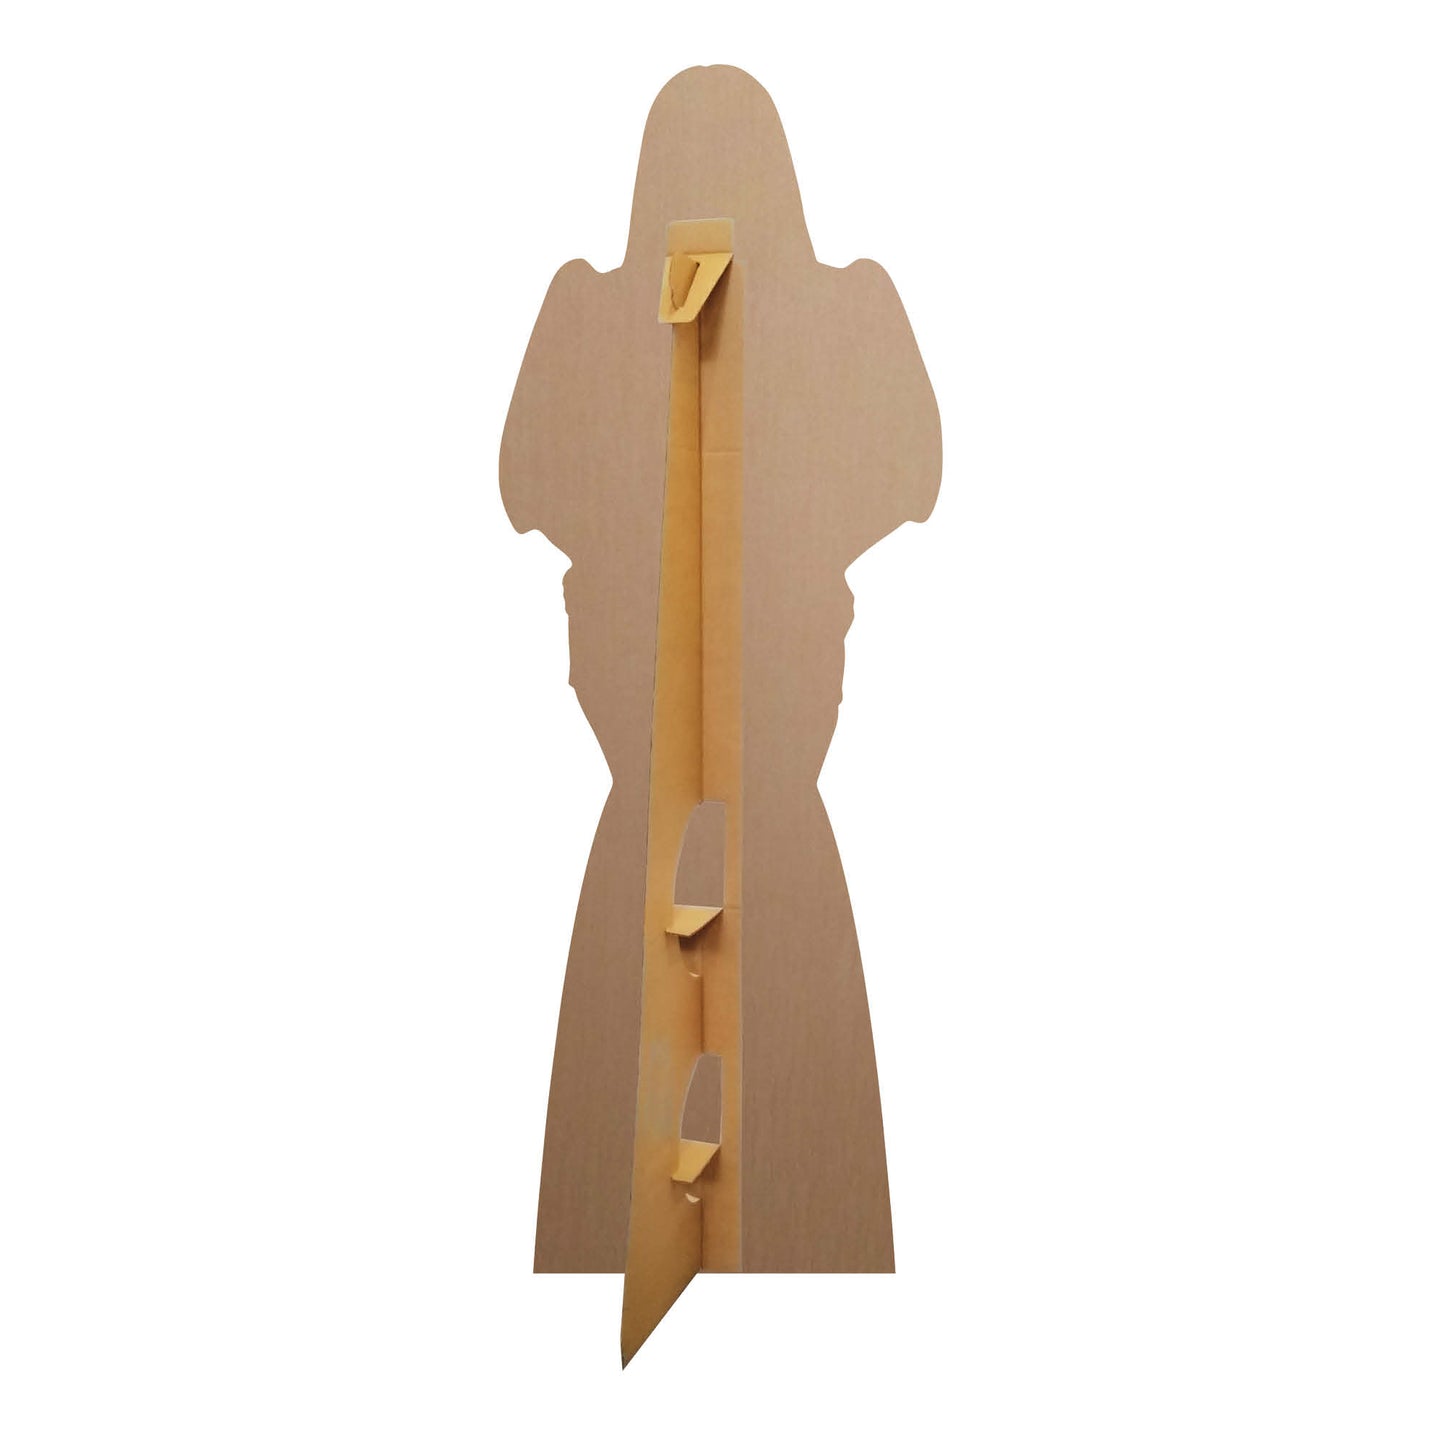 CS708 Nicki Minaj Height 163cm Lifesize Cardboard Cut Out With Mini